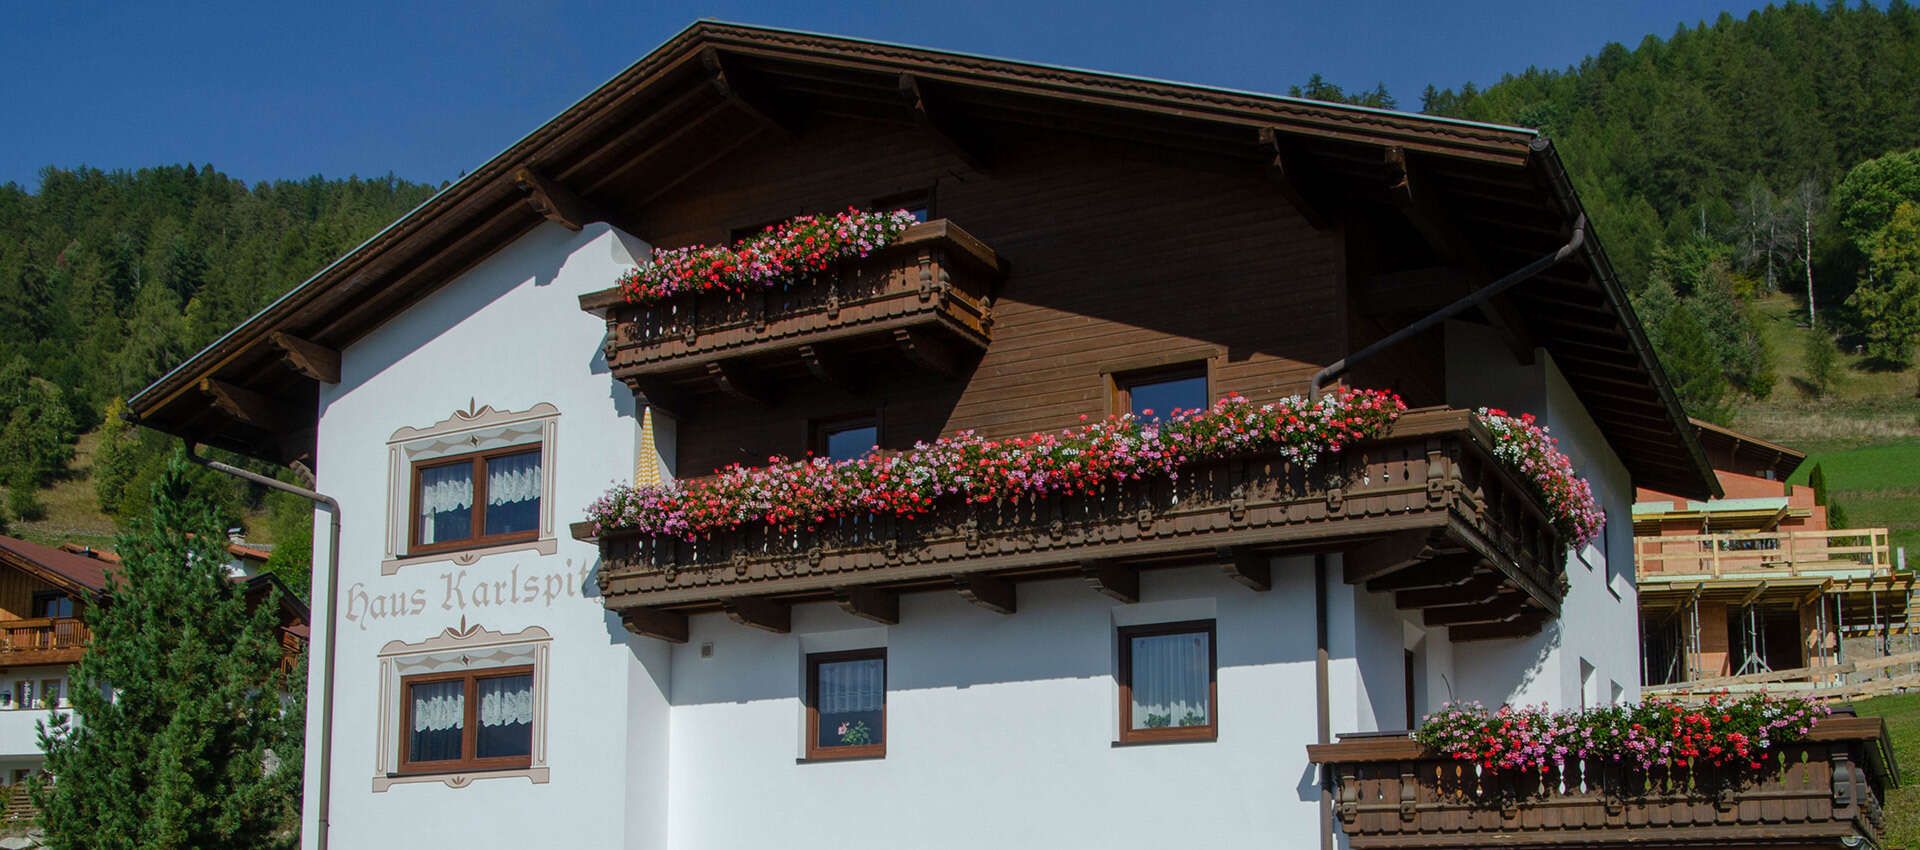 Haus Karlspitz im Sommer in Fendels im Kaunertal Tirol